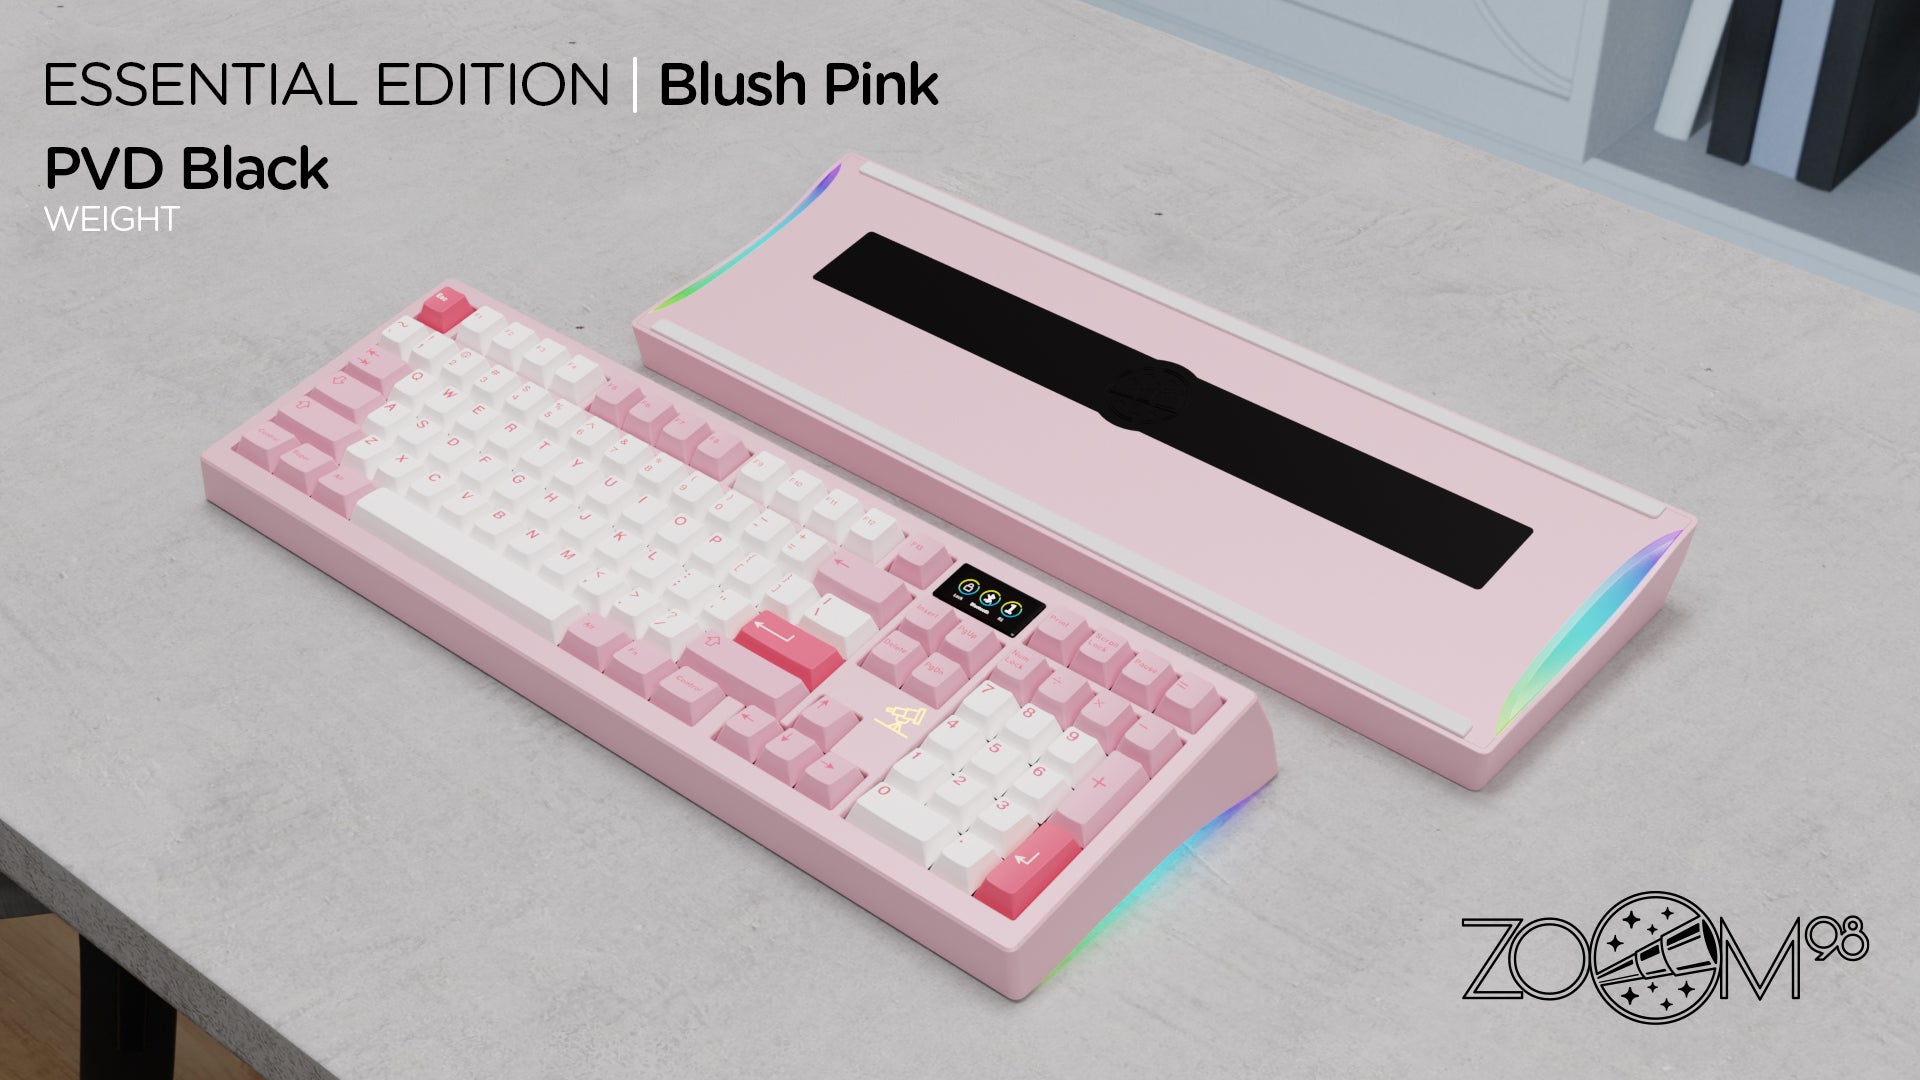 Zoom98 EE Blush Pink